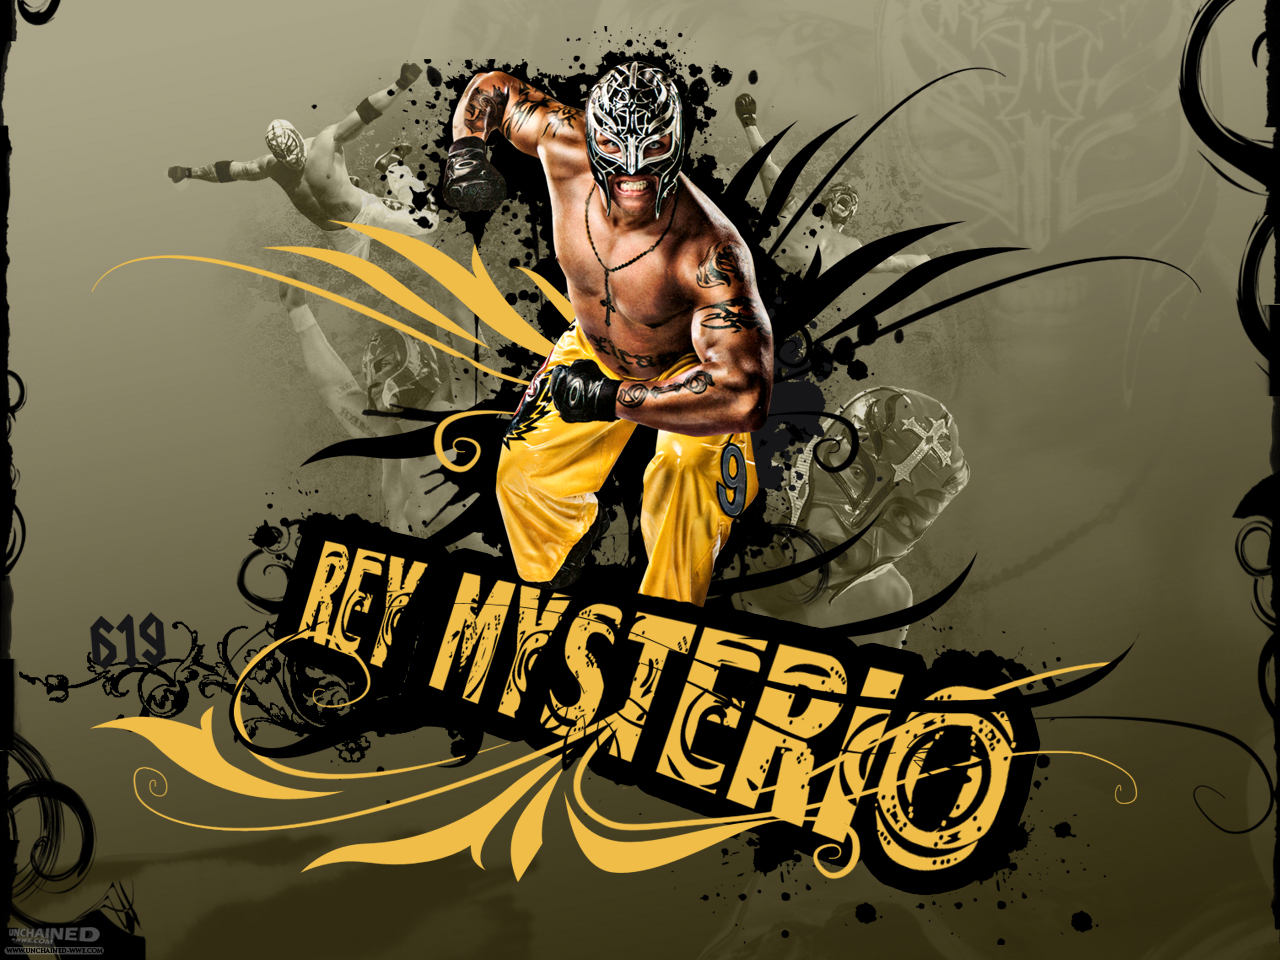 Wwe Champion Rey Mysterio Wallpaper